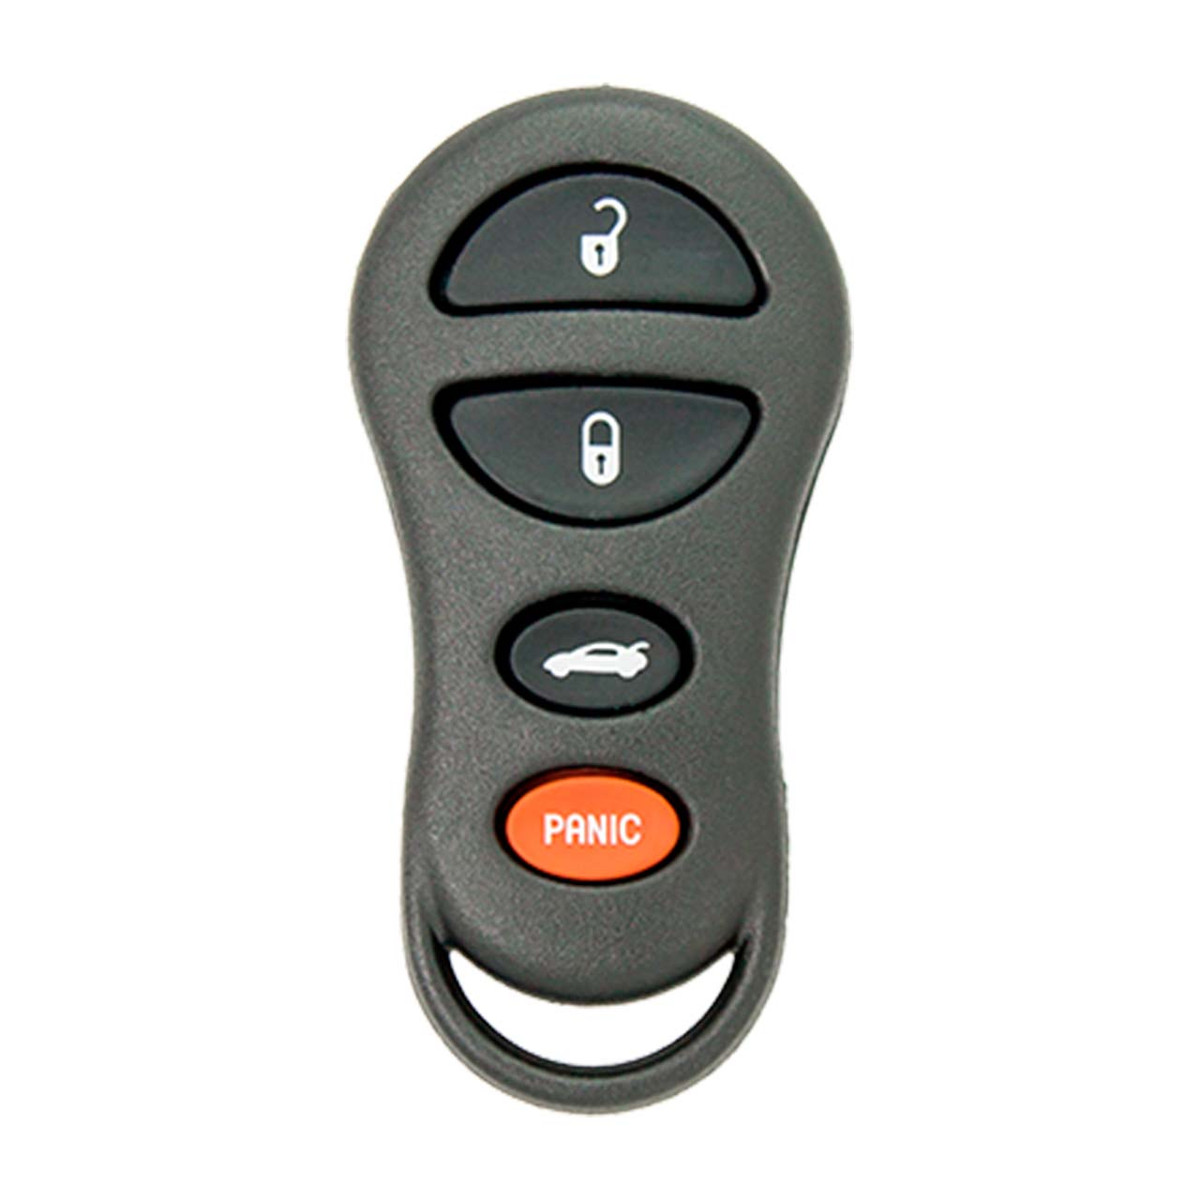 Ilco Look-Alike RKE-CHRY-4B1, Remote, Chrysler 4 Button Keyless Entry, FCC GQ43VT17T